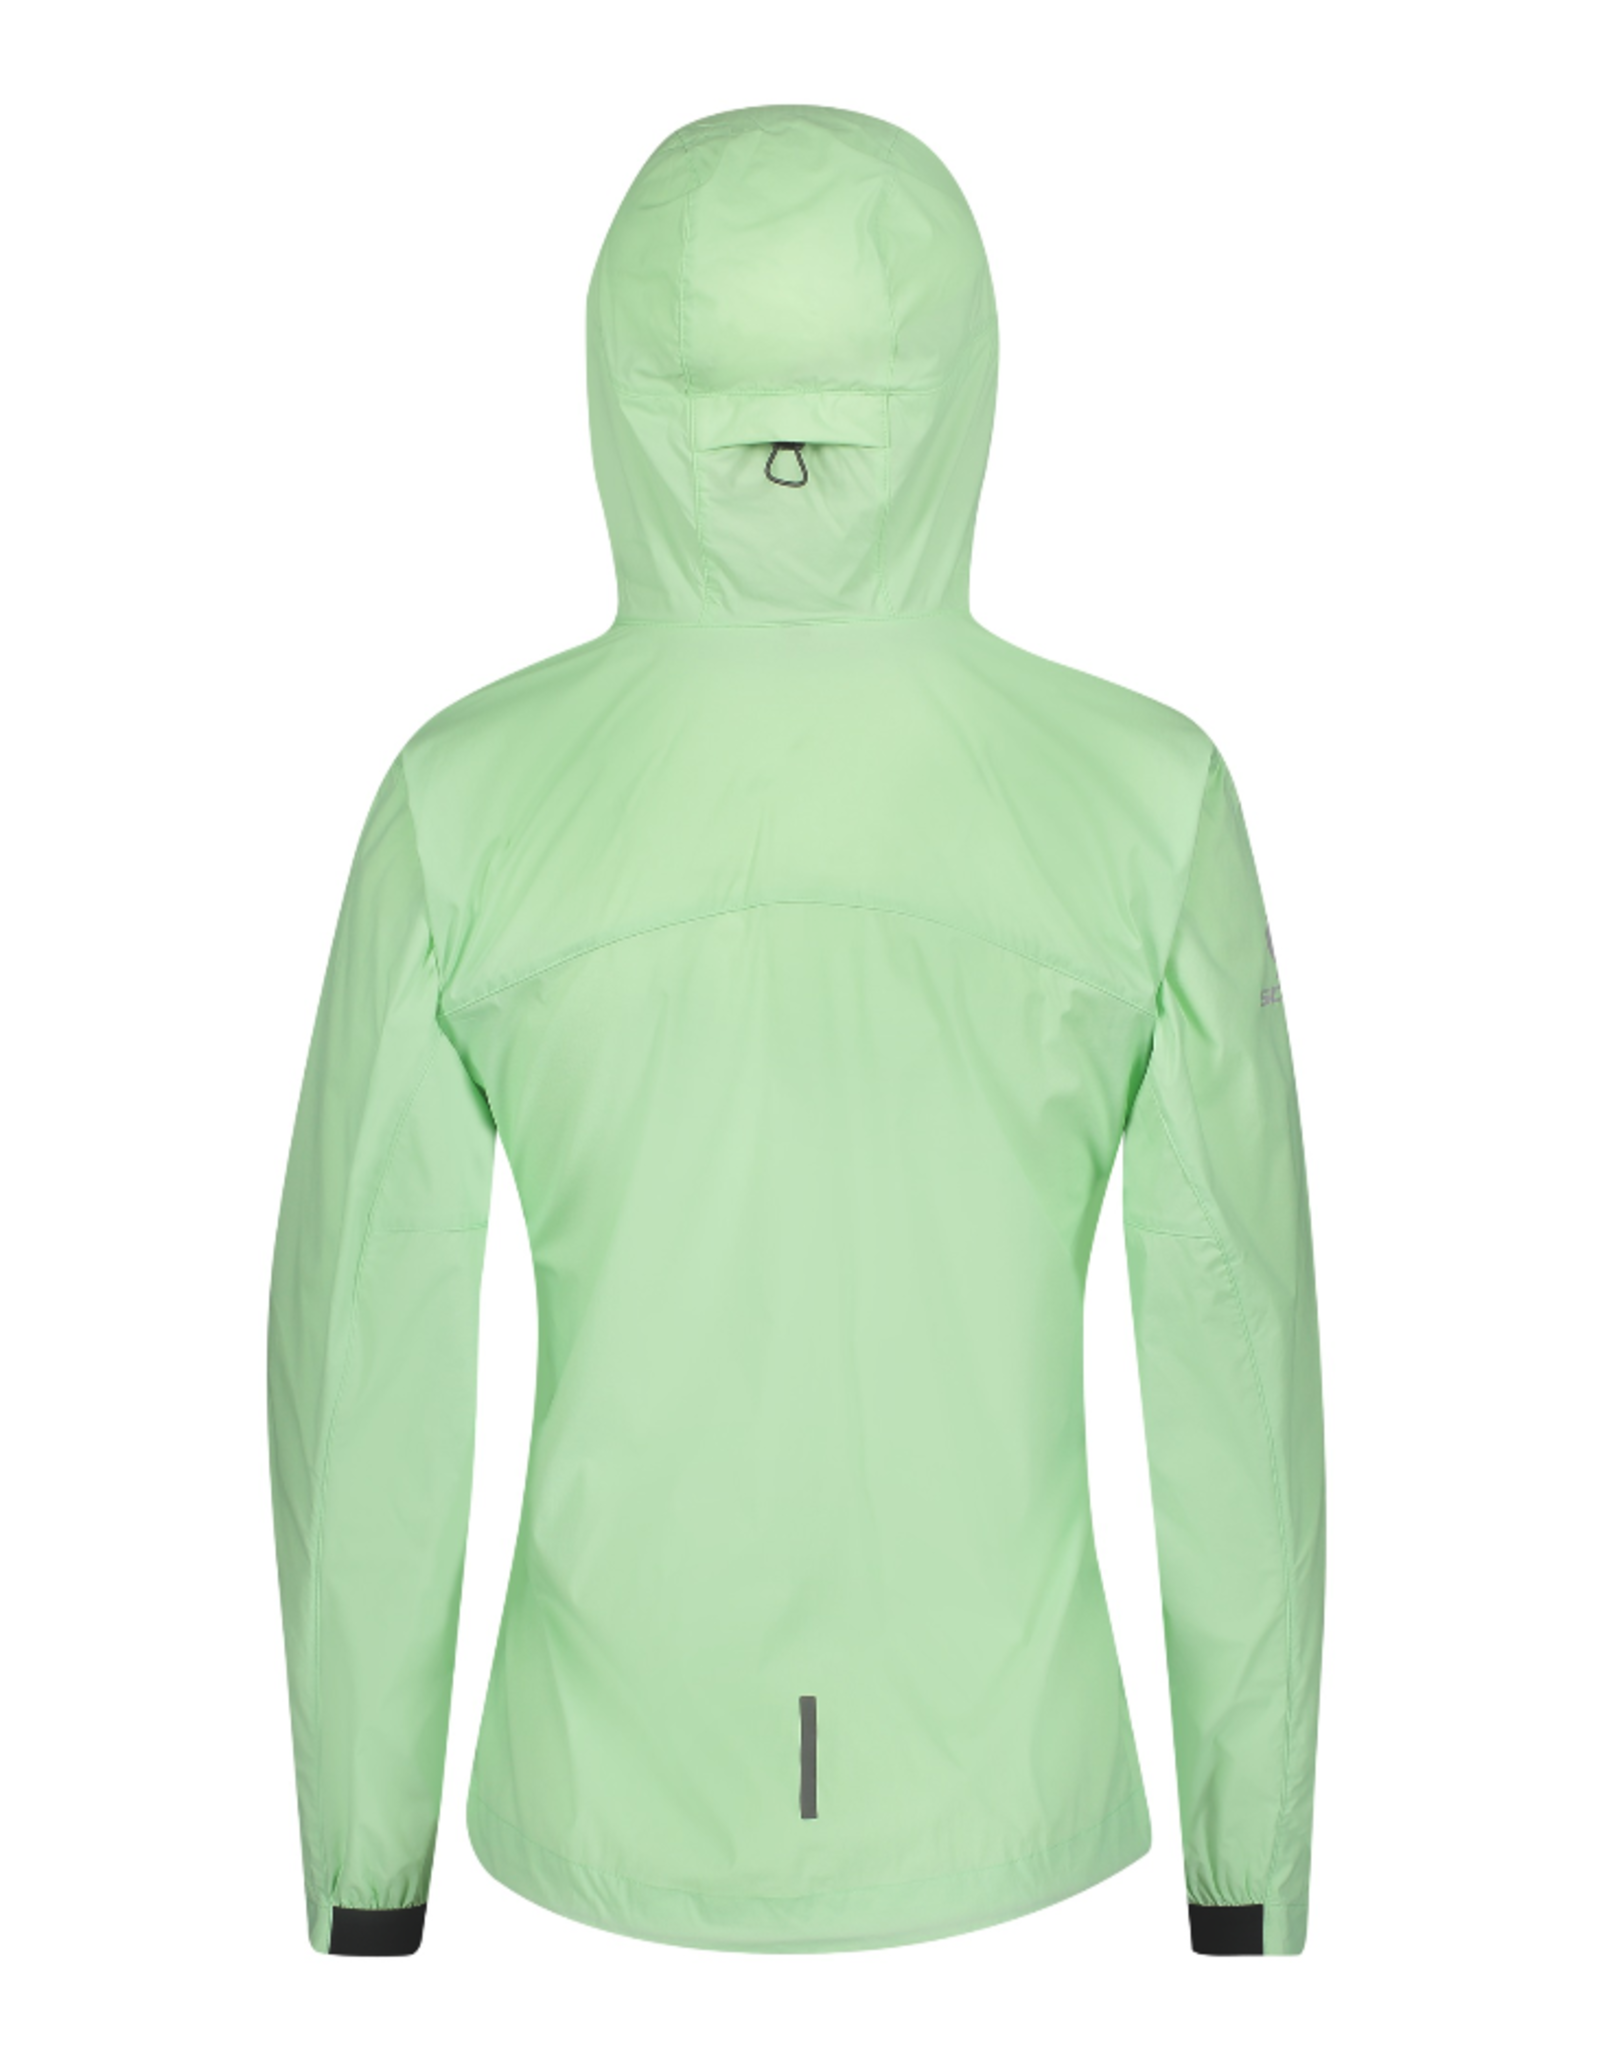 SCOTT LAST ONE -SCOTT Trail MTN WB w/Hood Women's Jacket Mint Green size EU S/US XS